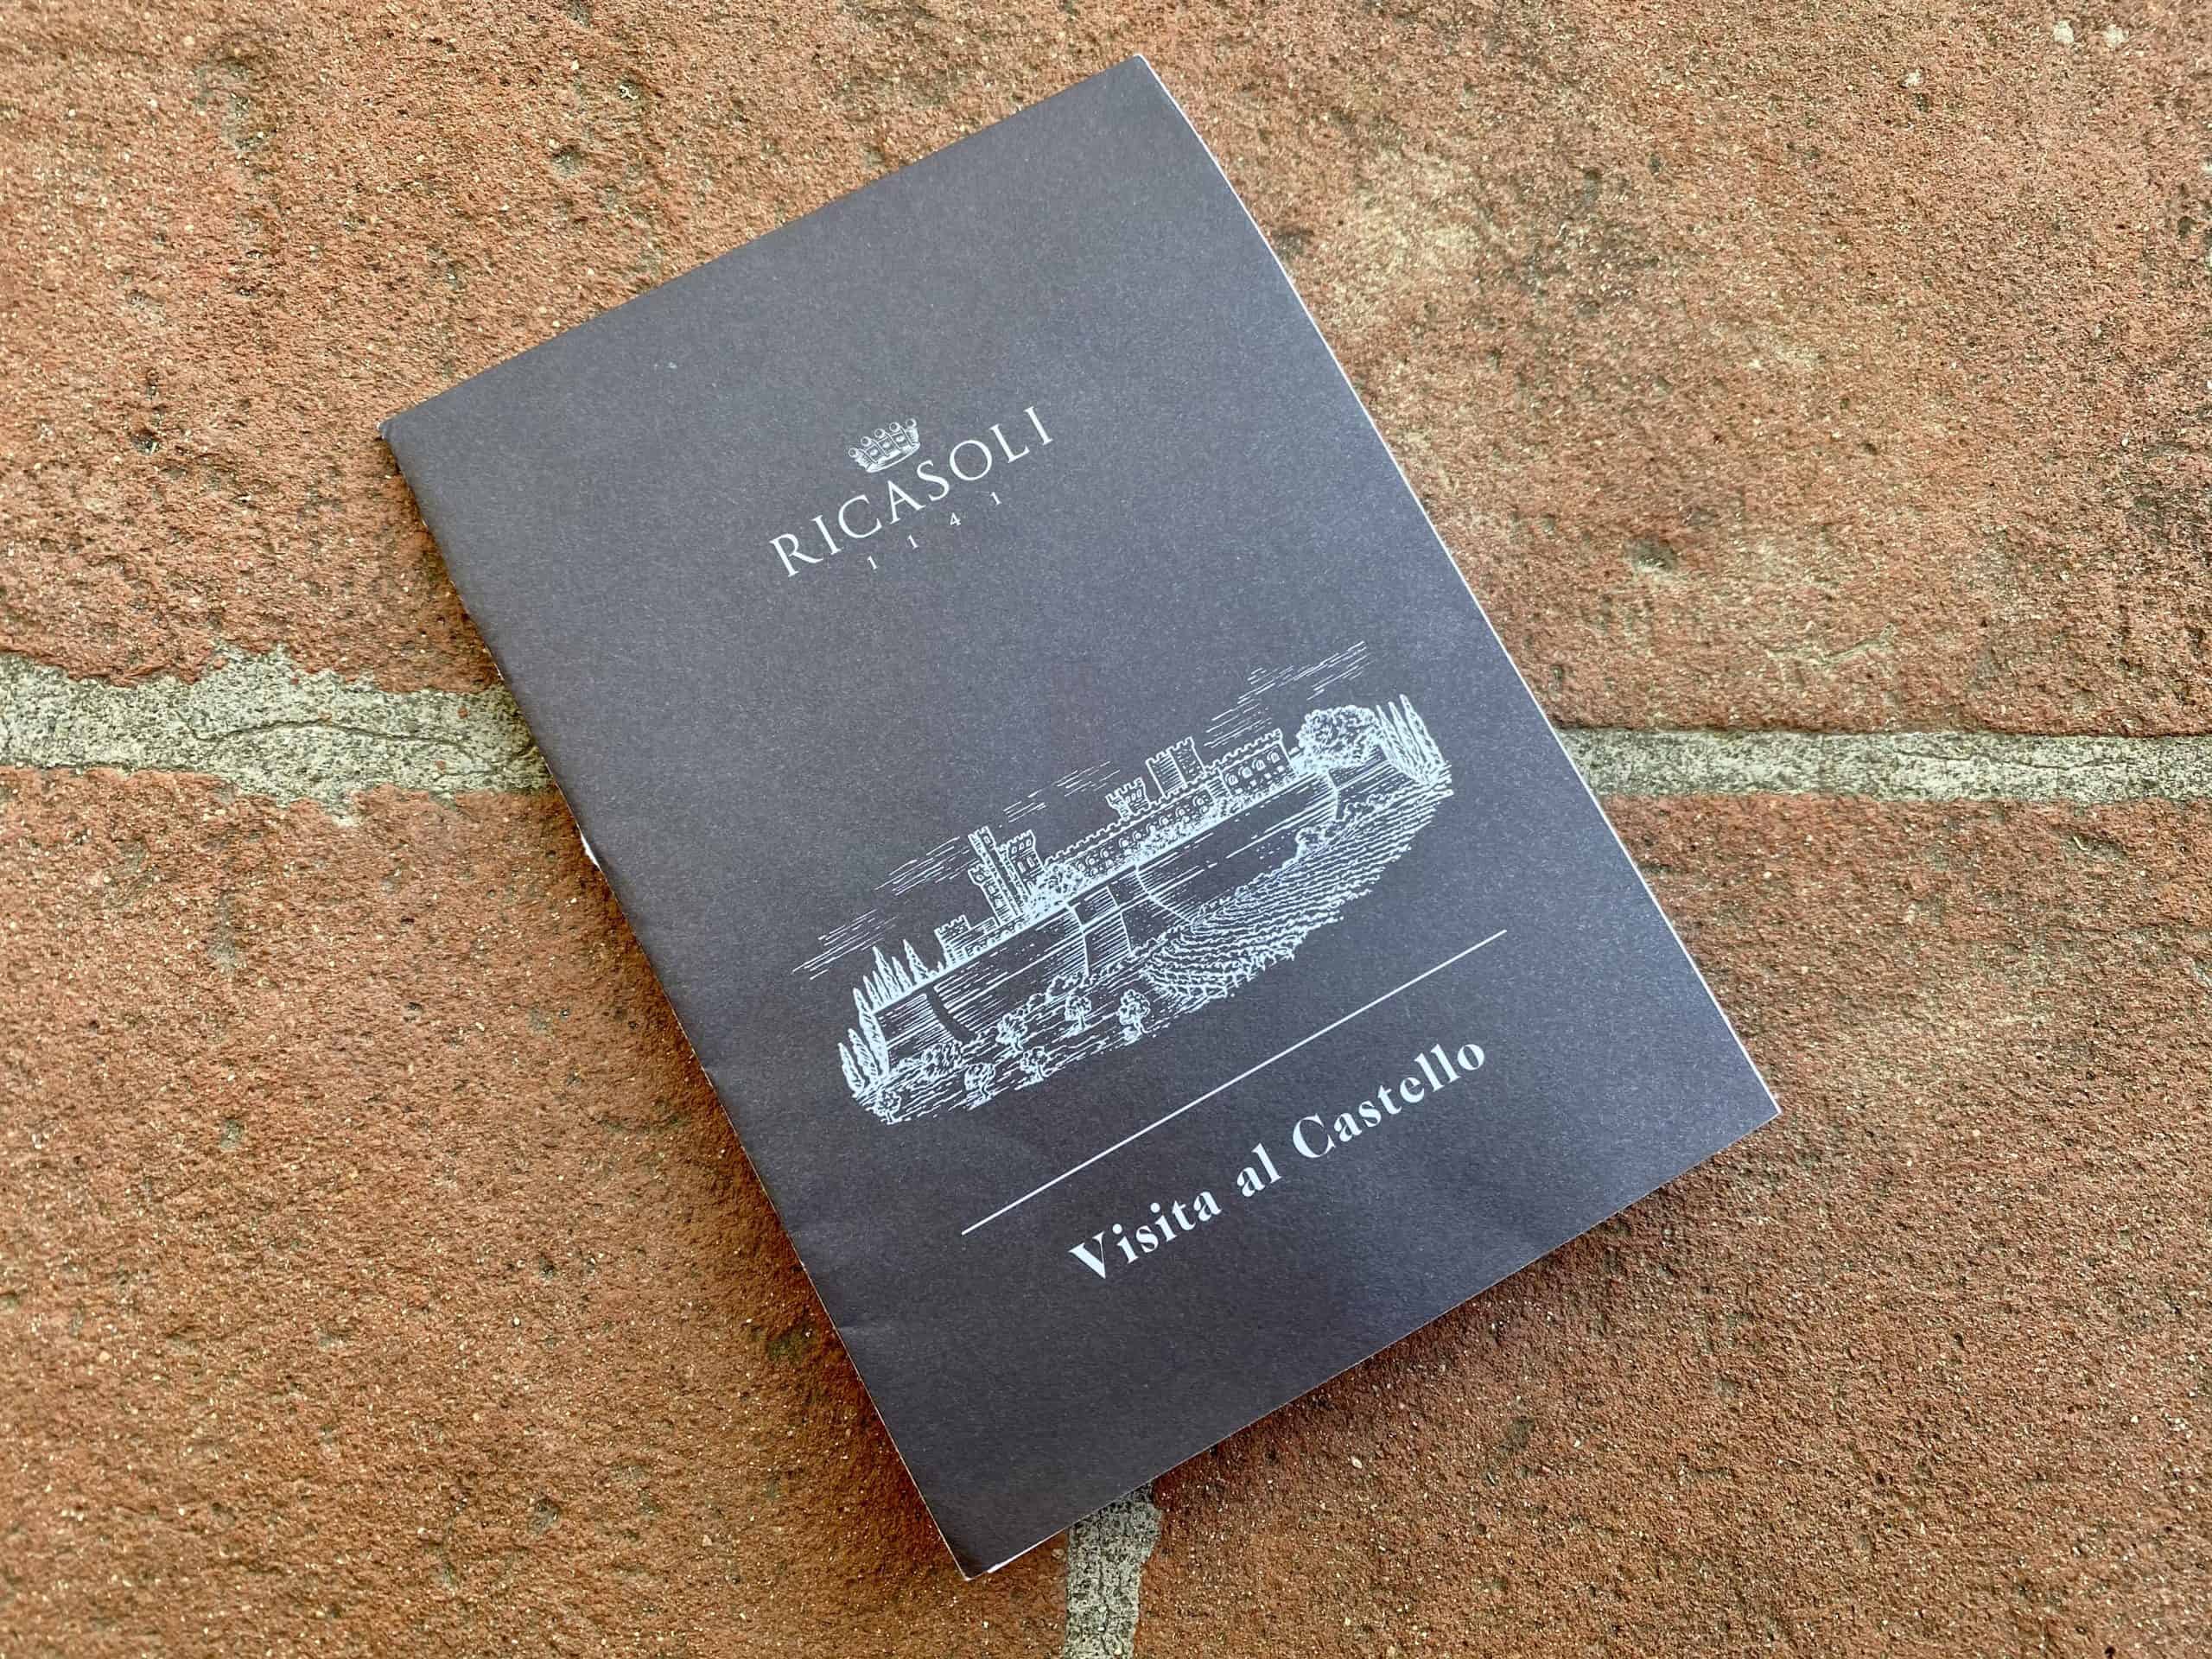 Visitor's pamphlet for Castello di Brolio (Brolio Castle), sitting on terracotta bricks.